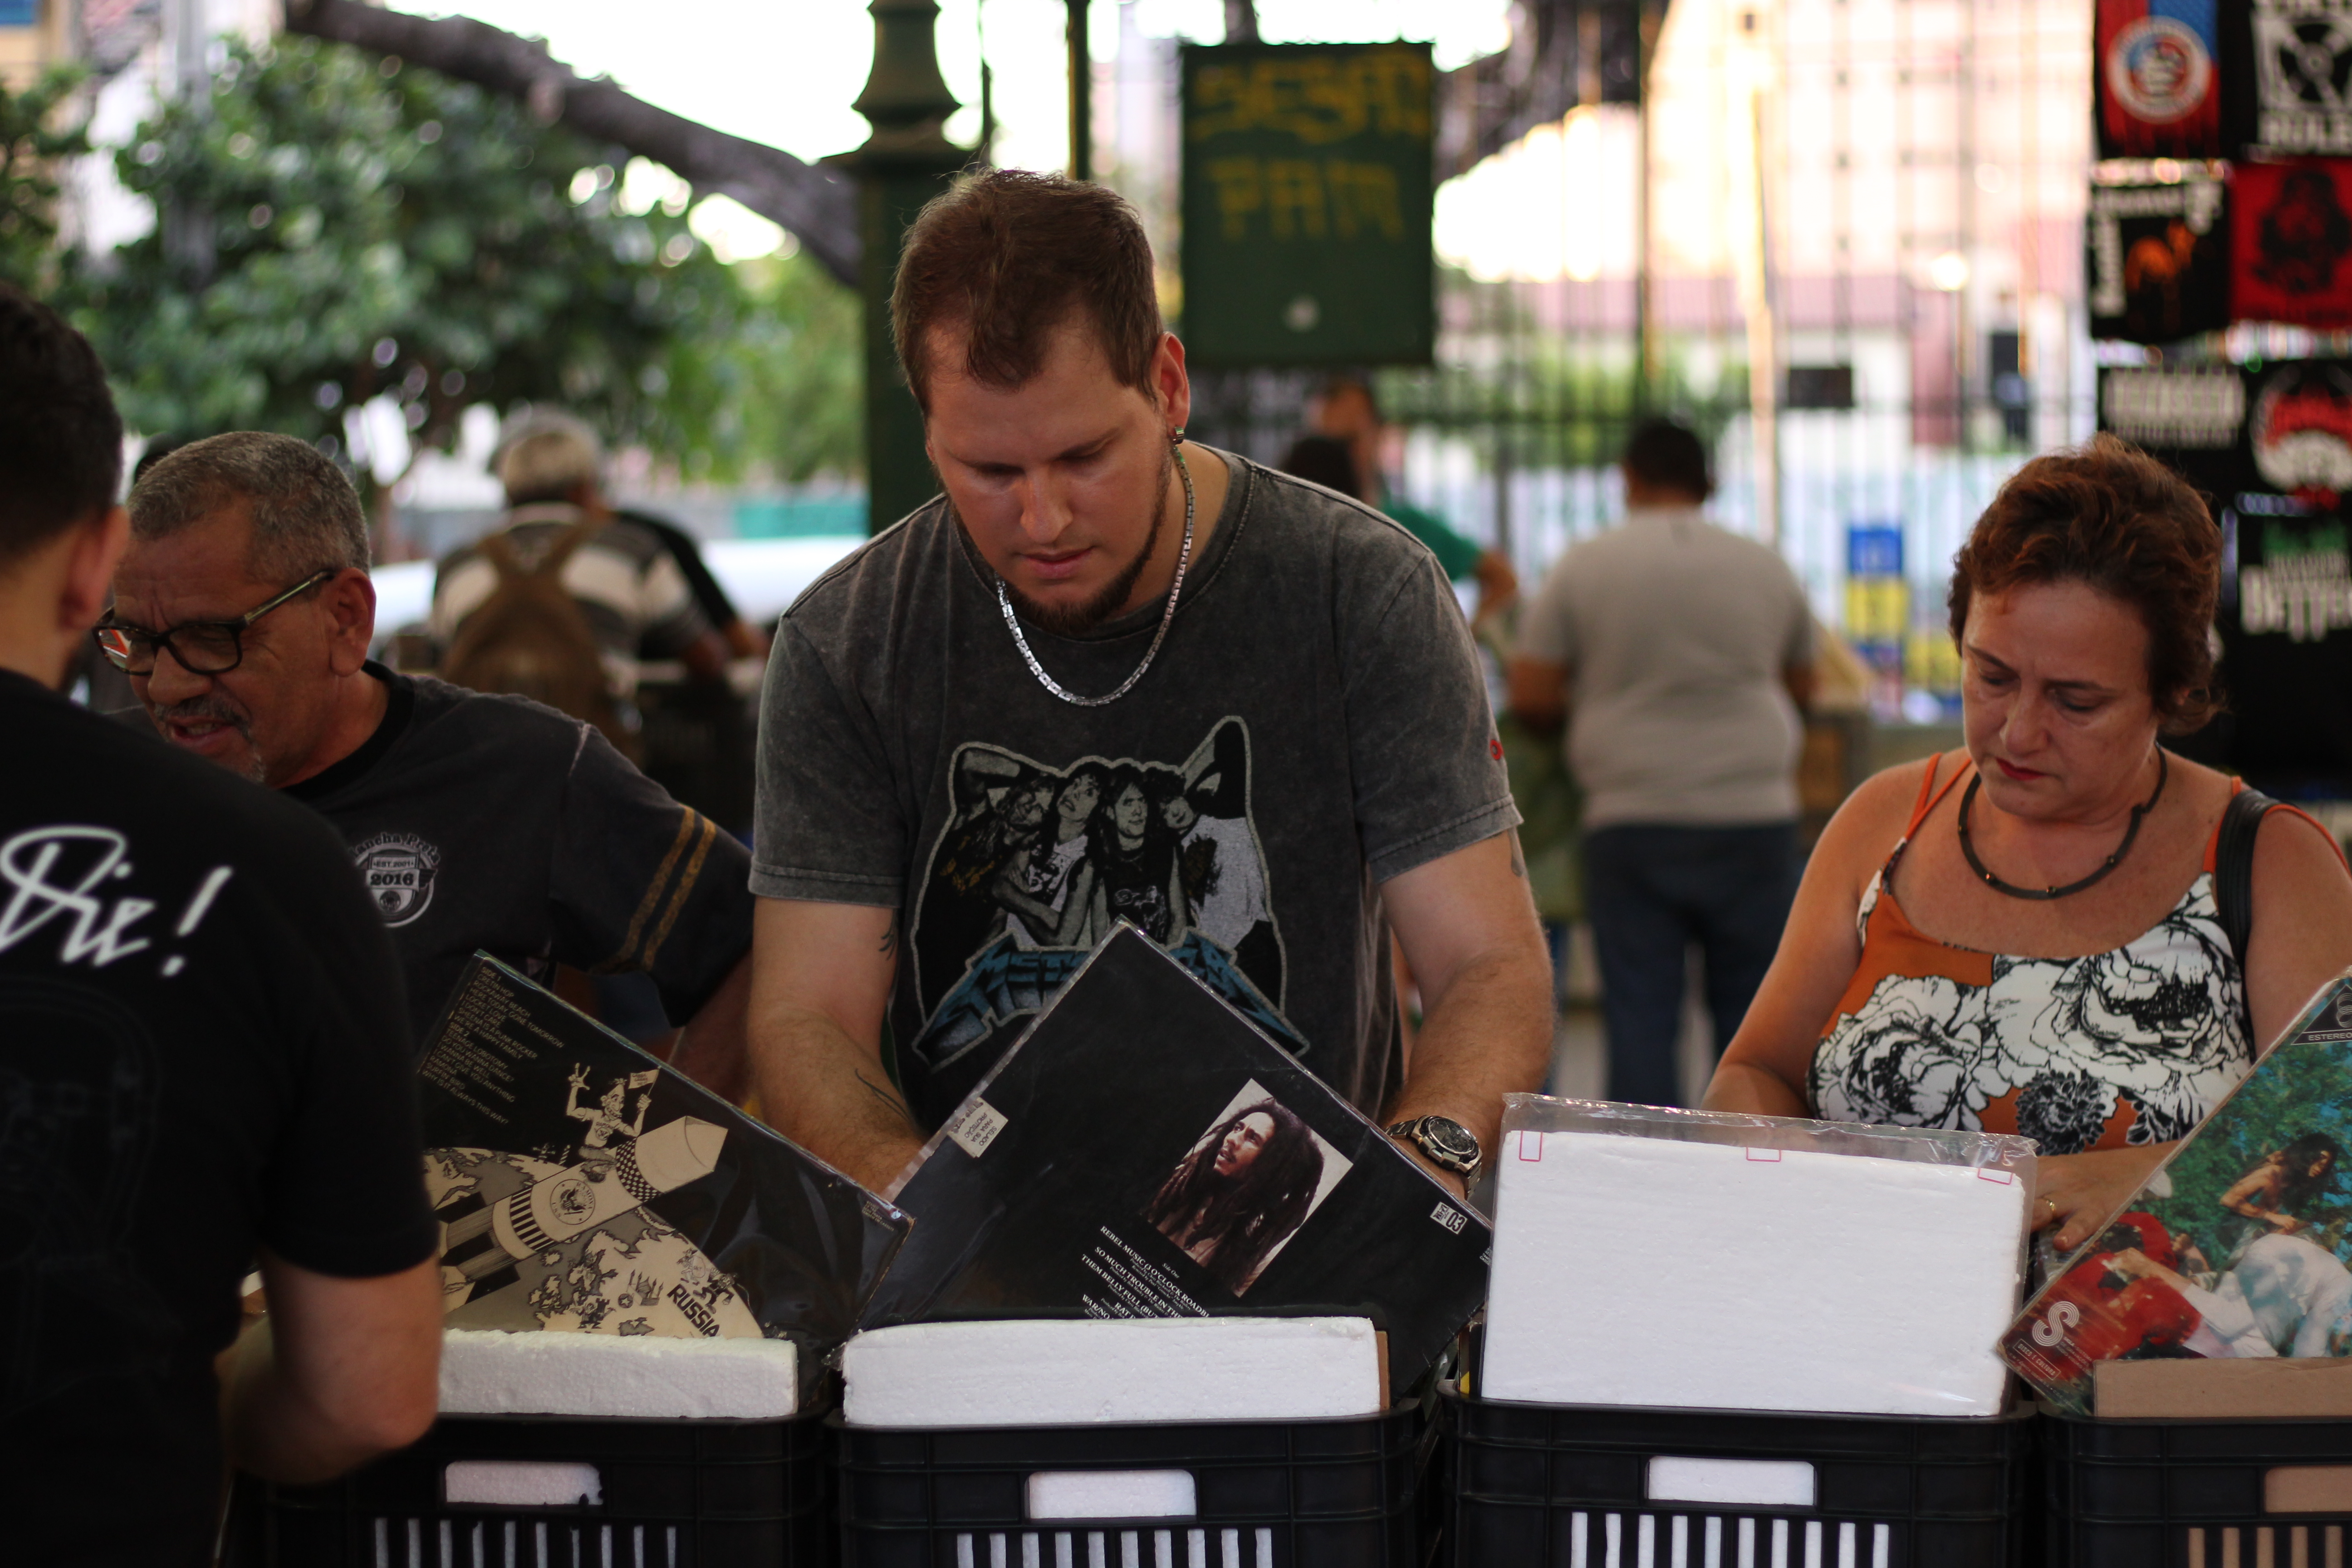 Visitantes da feira Afins de Vitrola escolhem discos de vinil